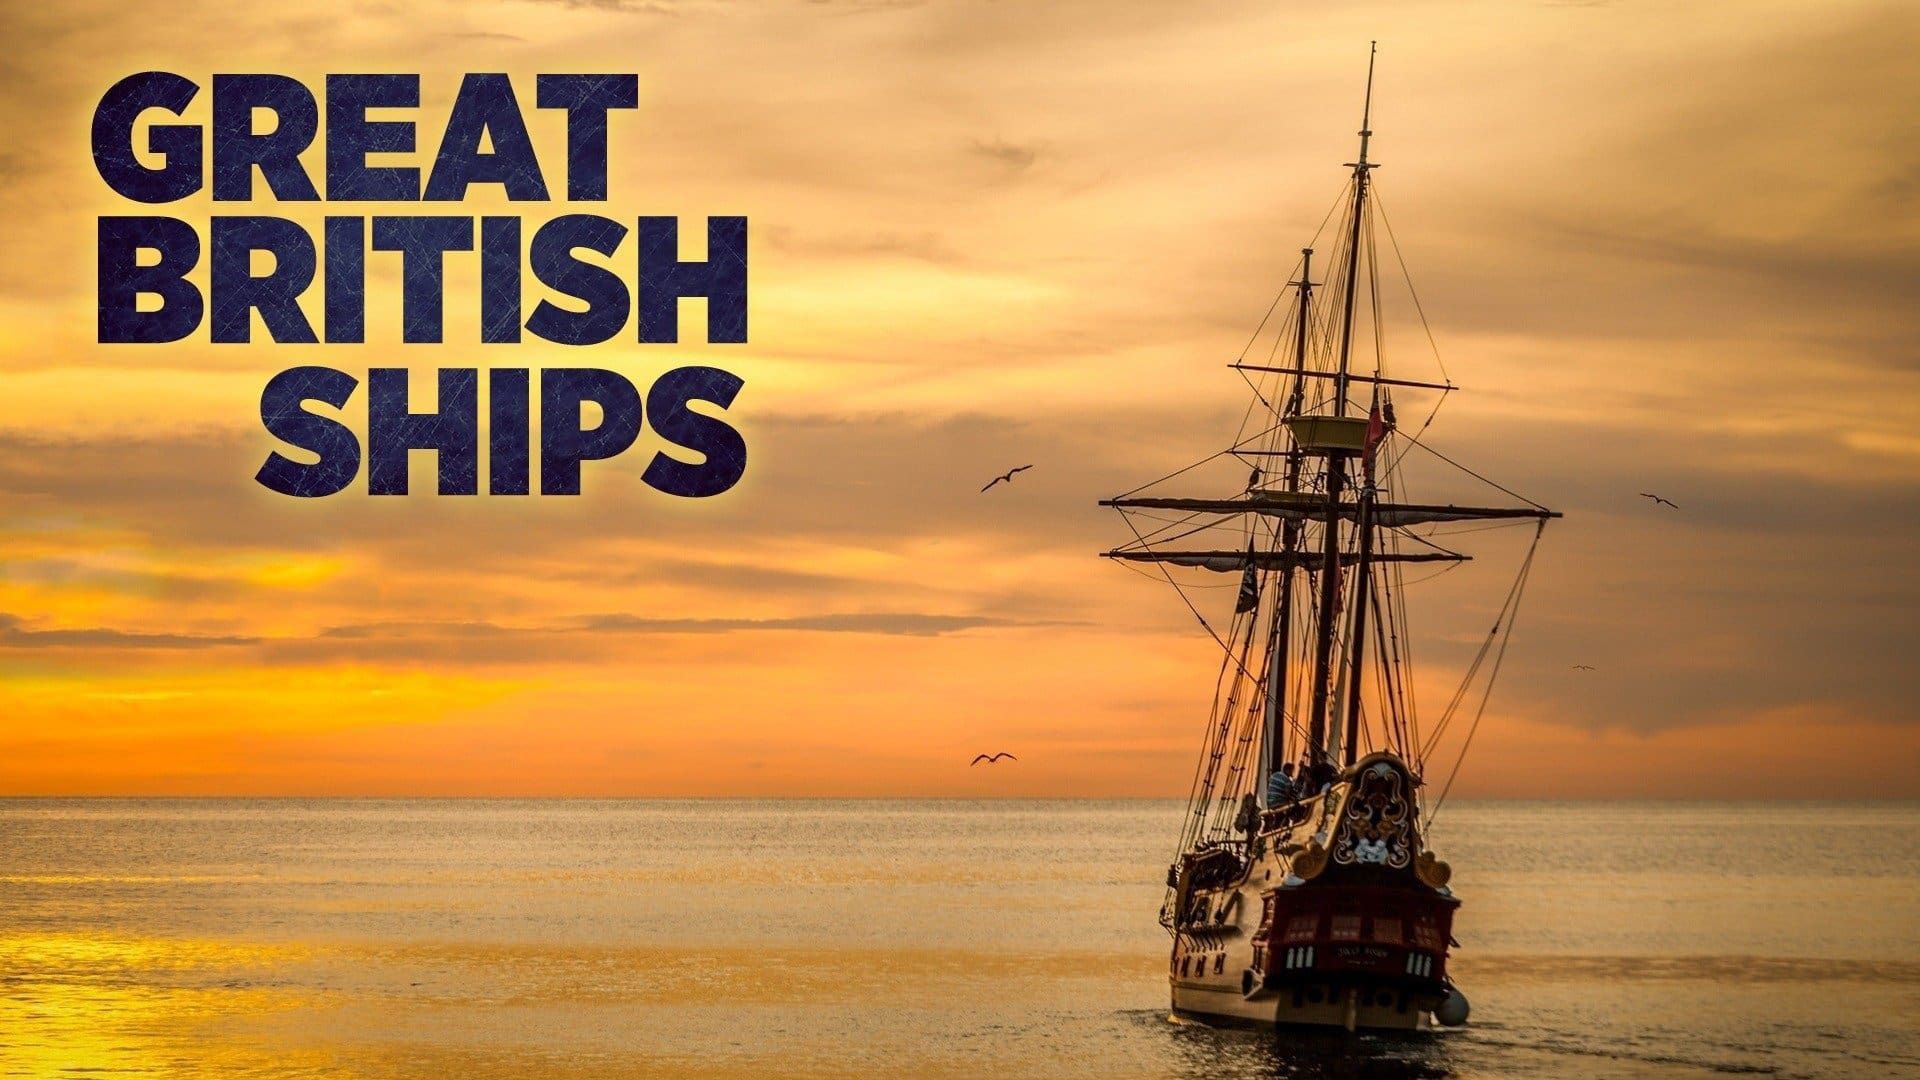 Great British Ships background